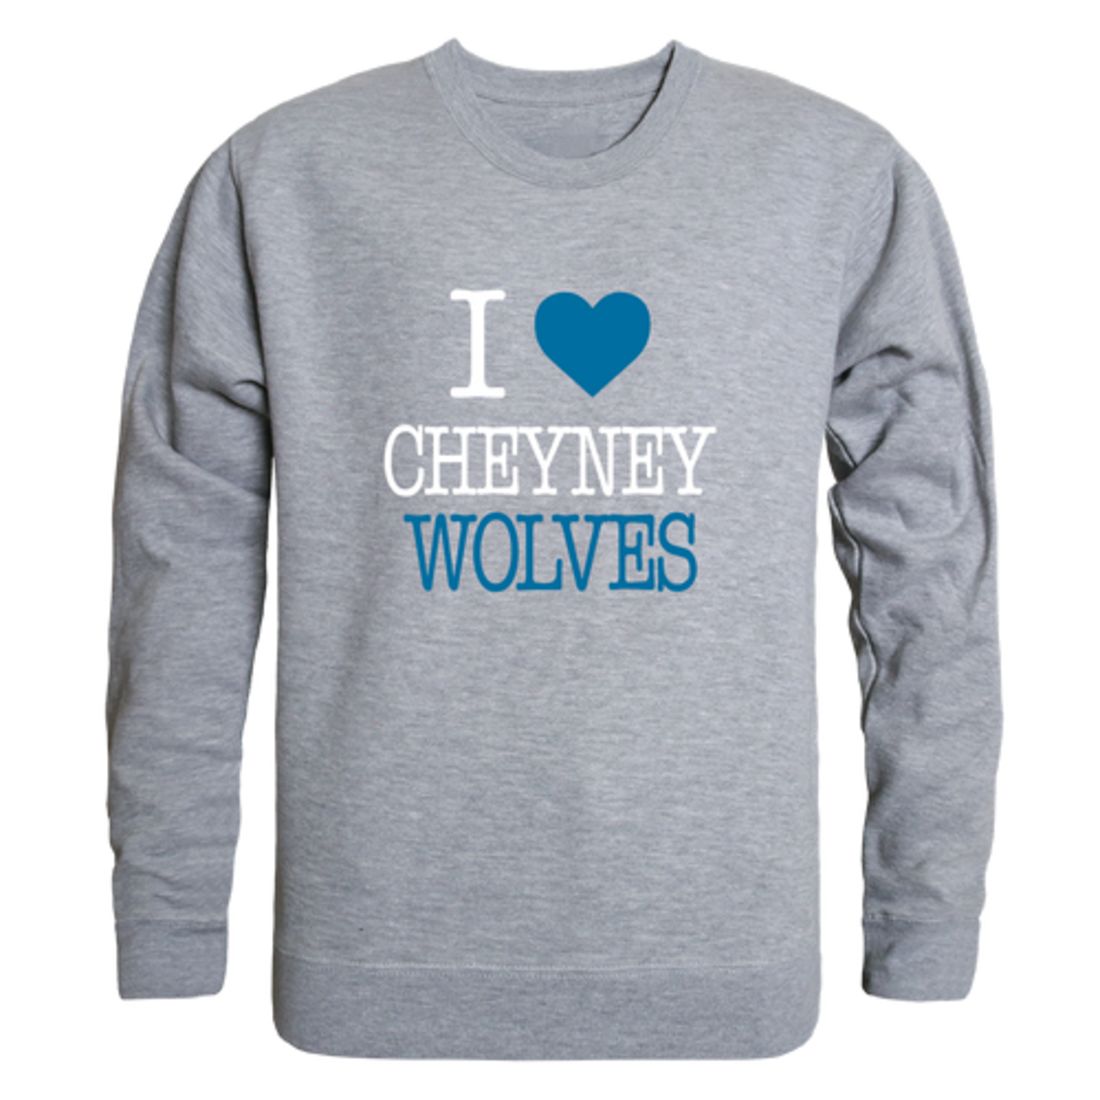 I-Love-Cheyney-University-of-Pennsylvania-Wolves-Fleece-Crewneck-Pullover-Sweatshirt